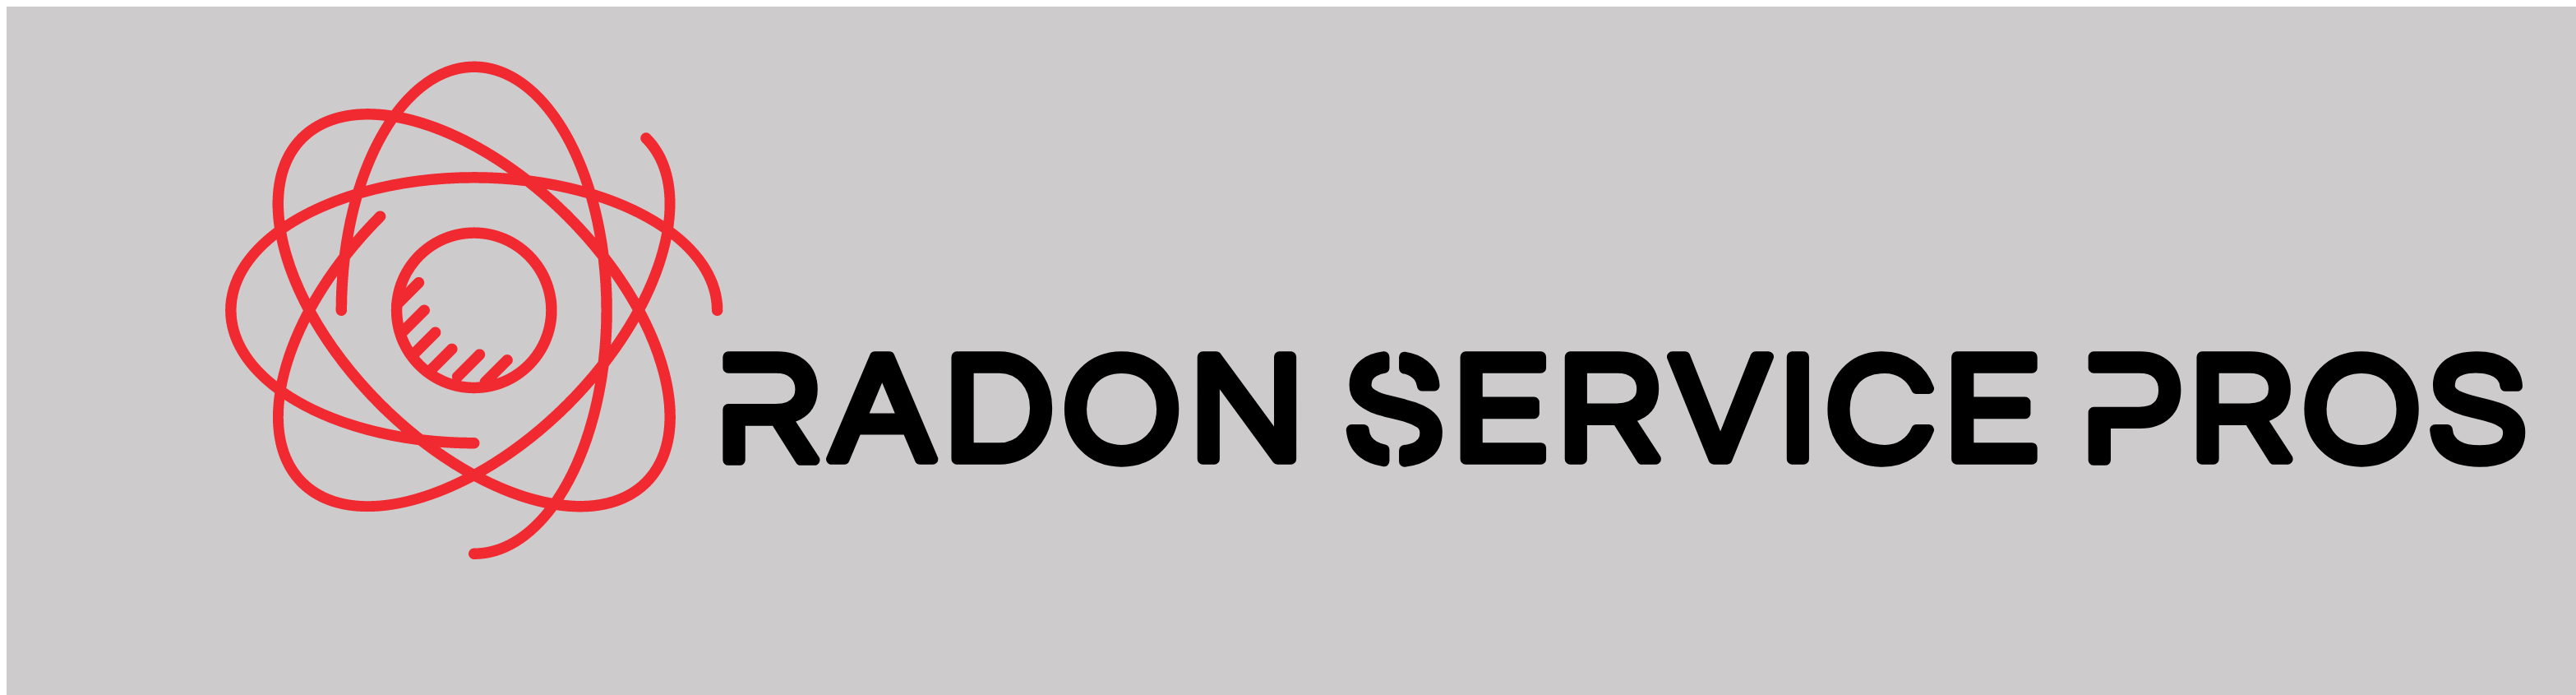 Radon Service Pros Logo